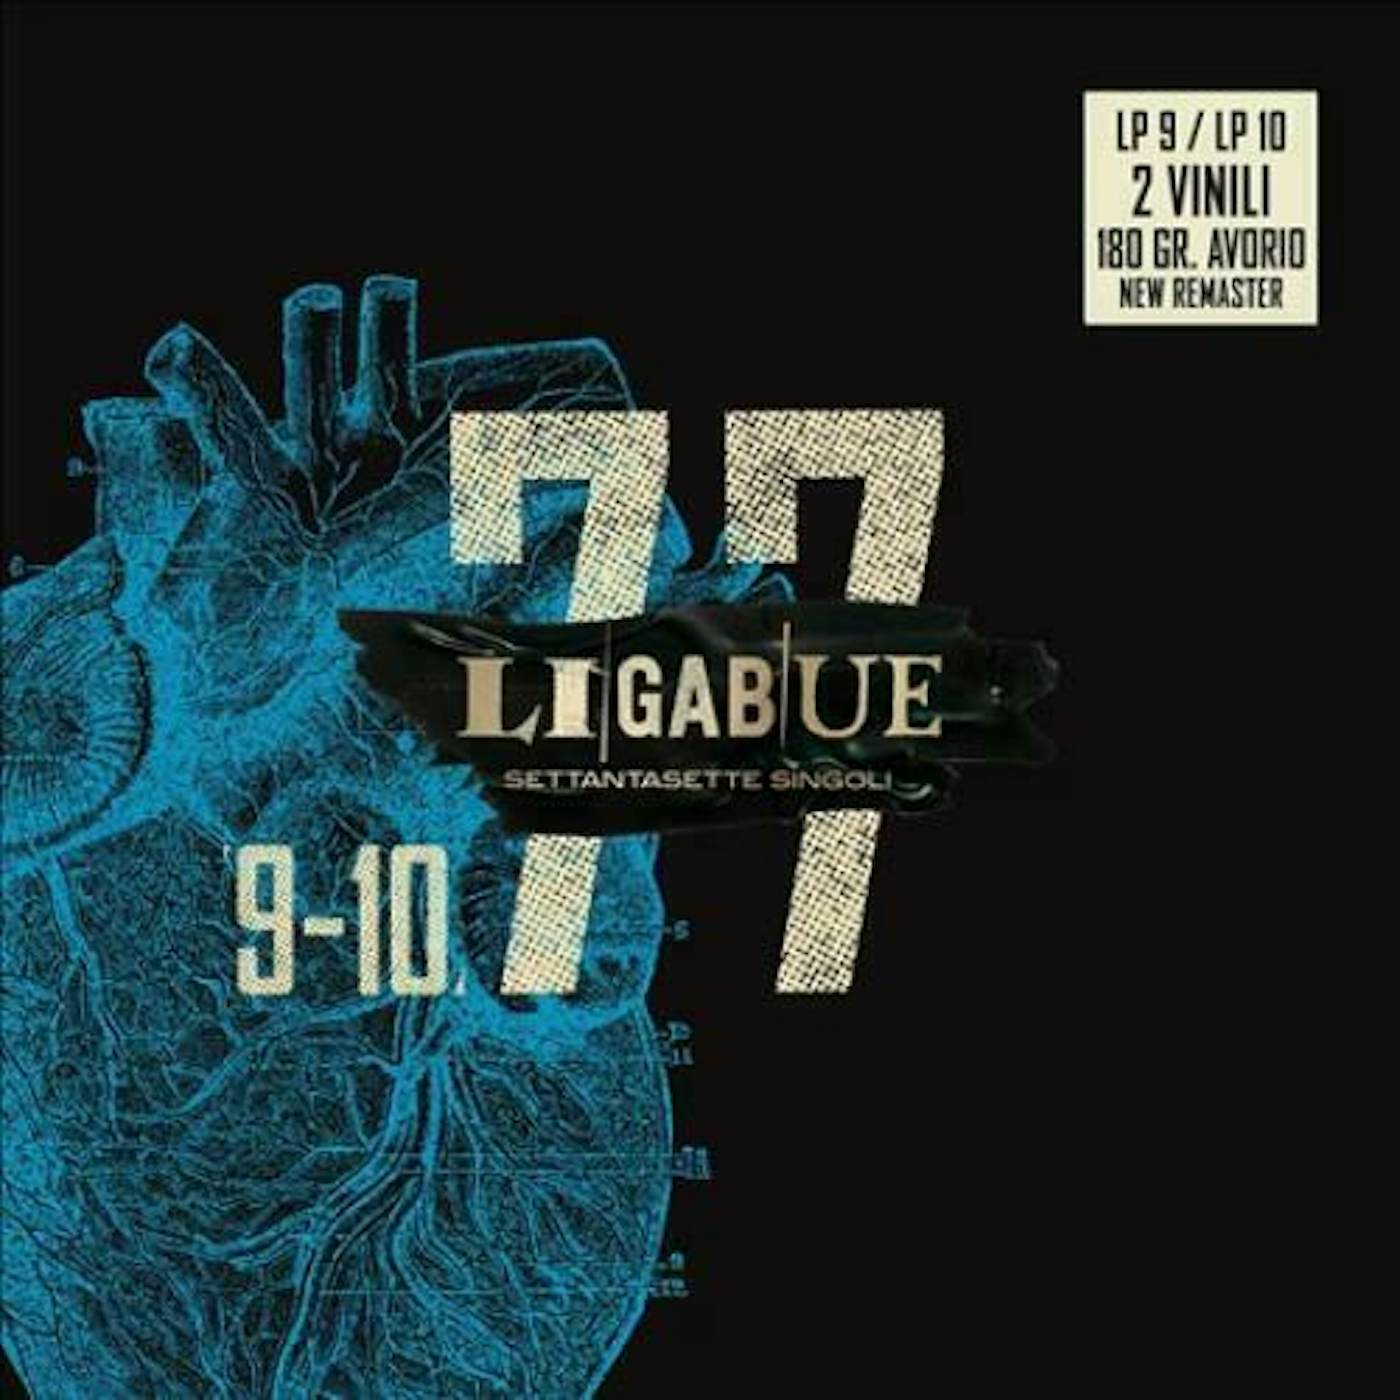 Ligabue 77 SINGOLI Vinyl Record